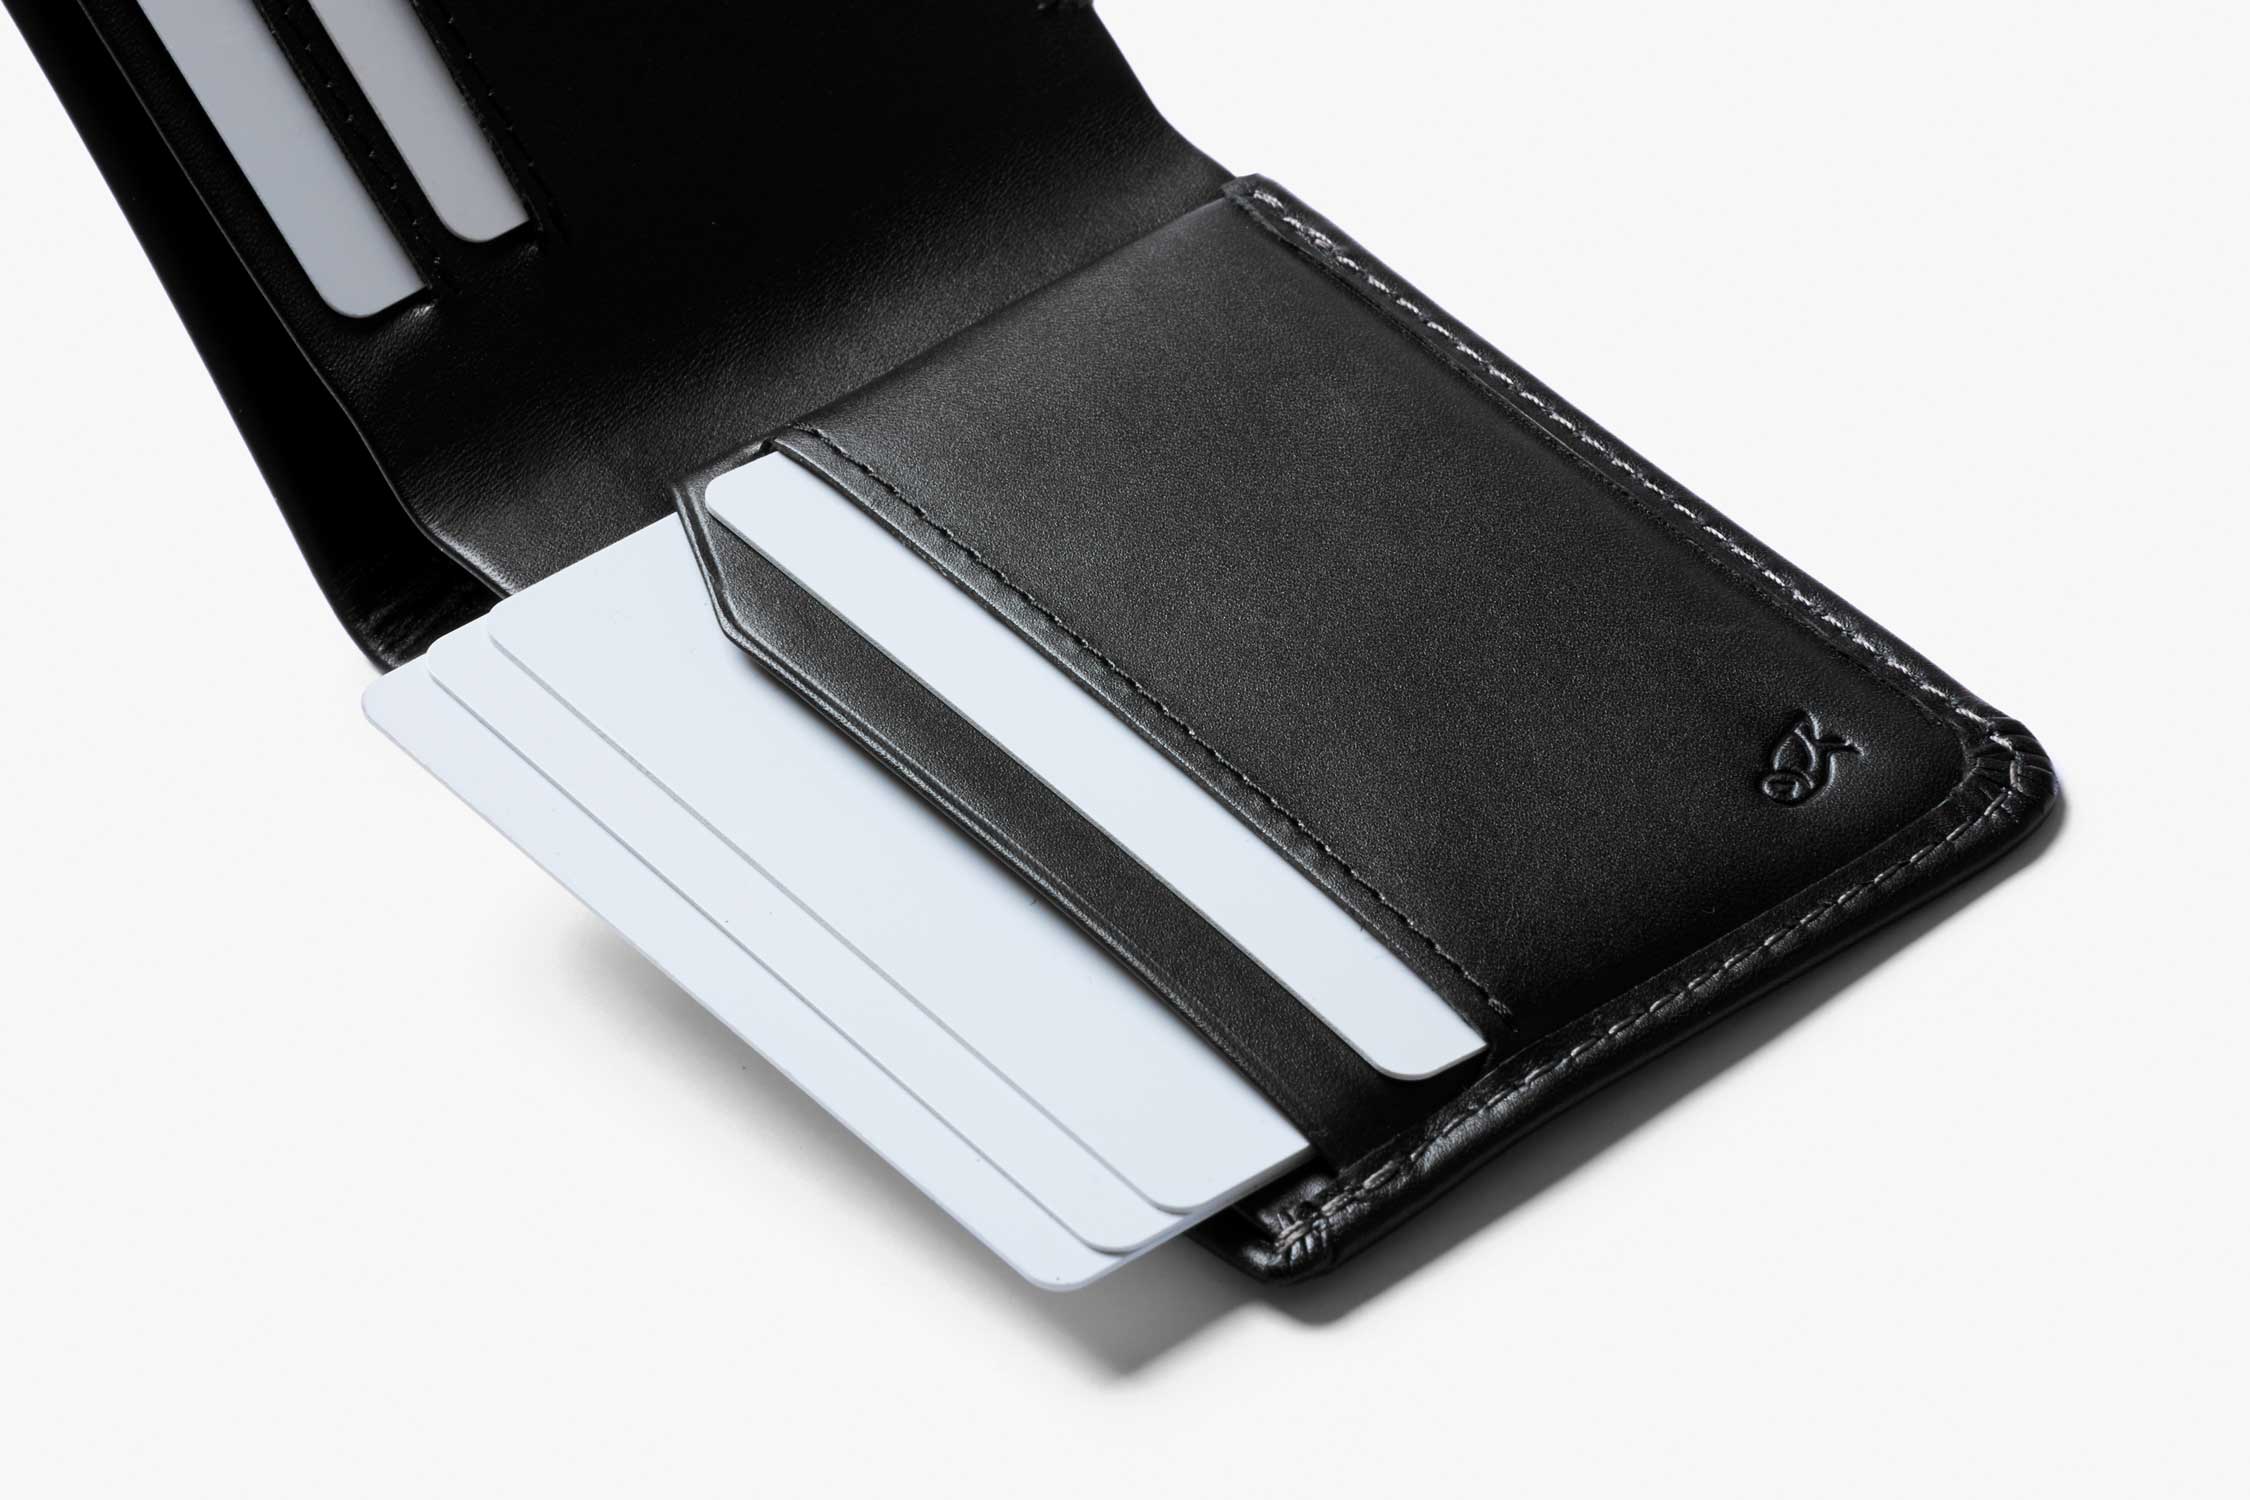 The Low: Slim Leather Bi-Fold Wallet Fits USD & AUD Bills | Bellroy